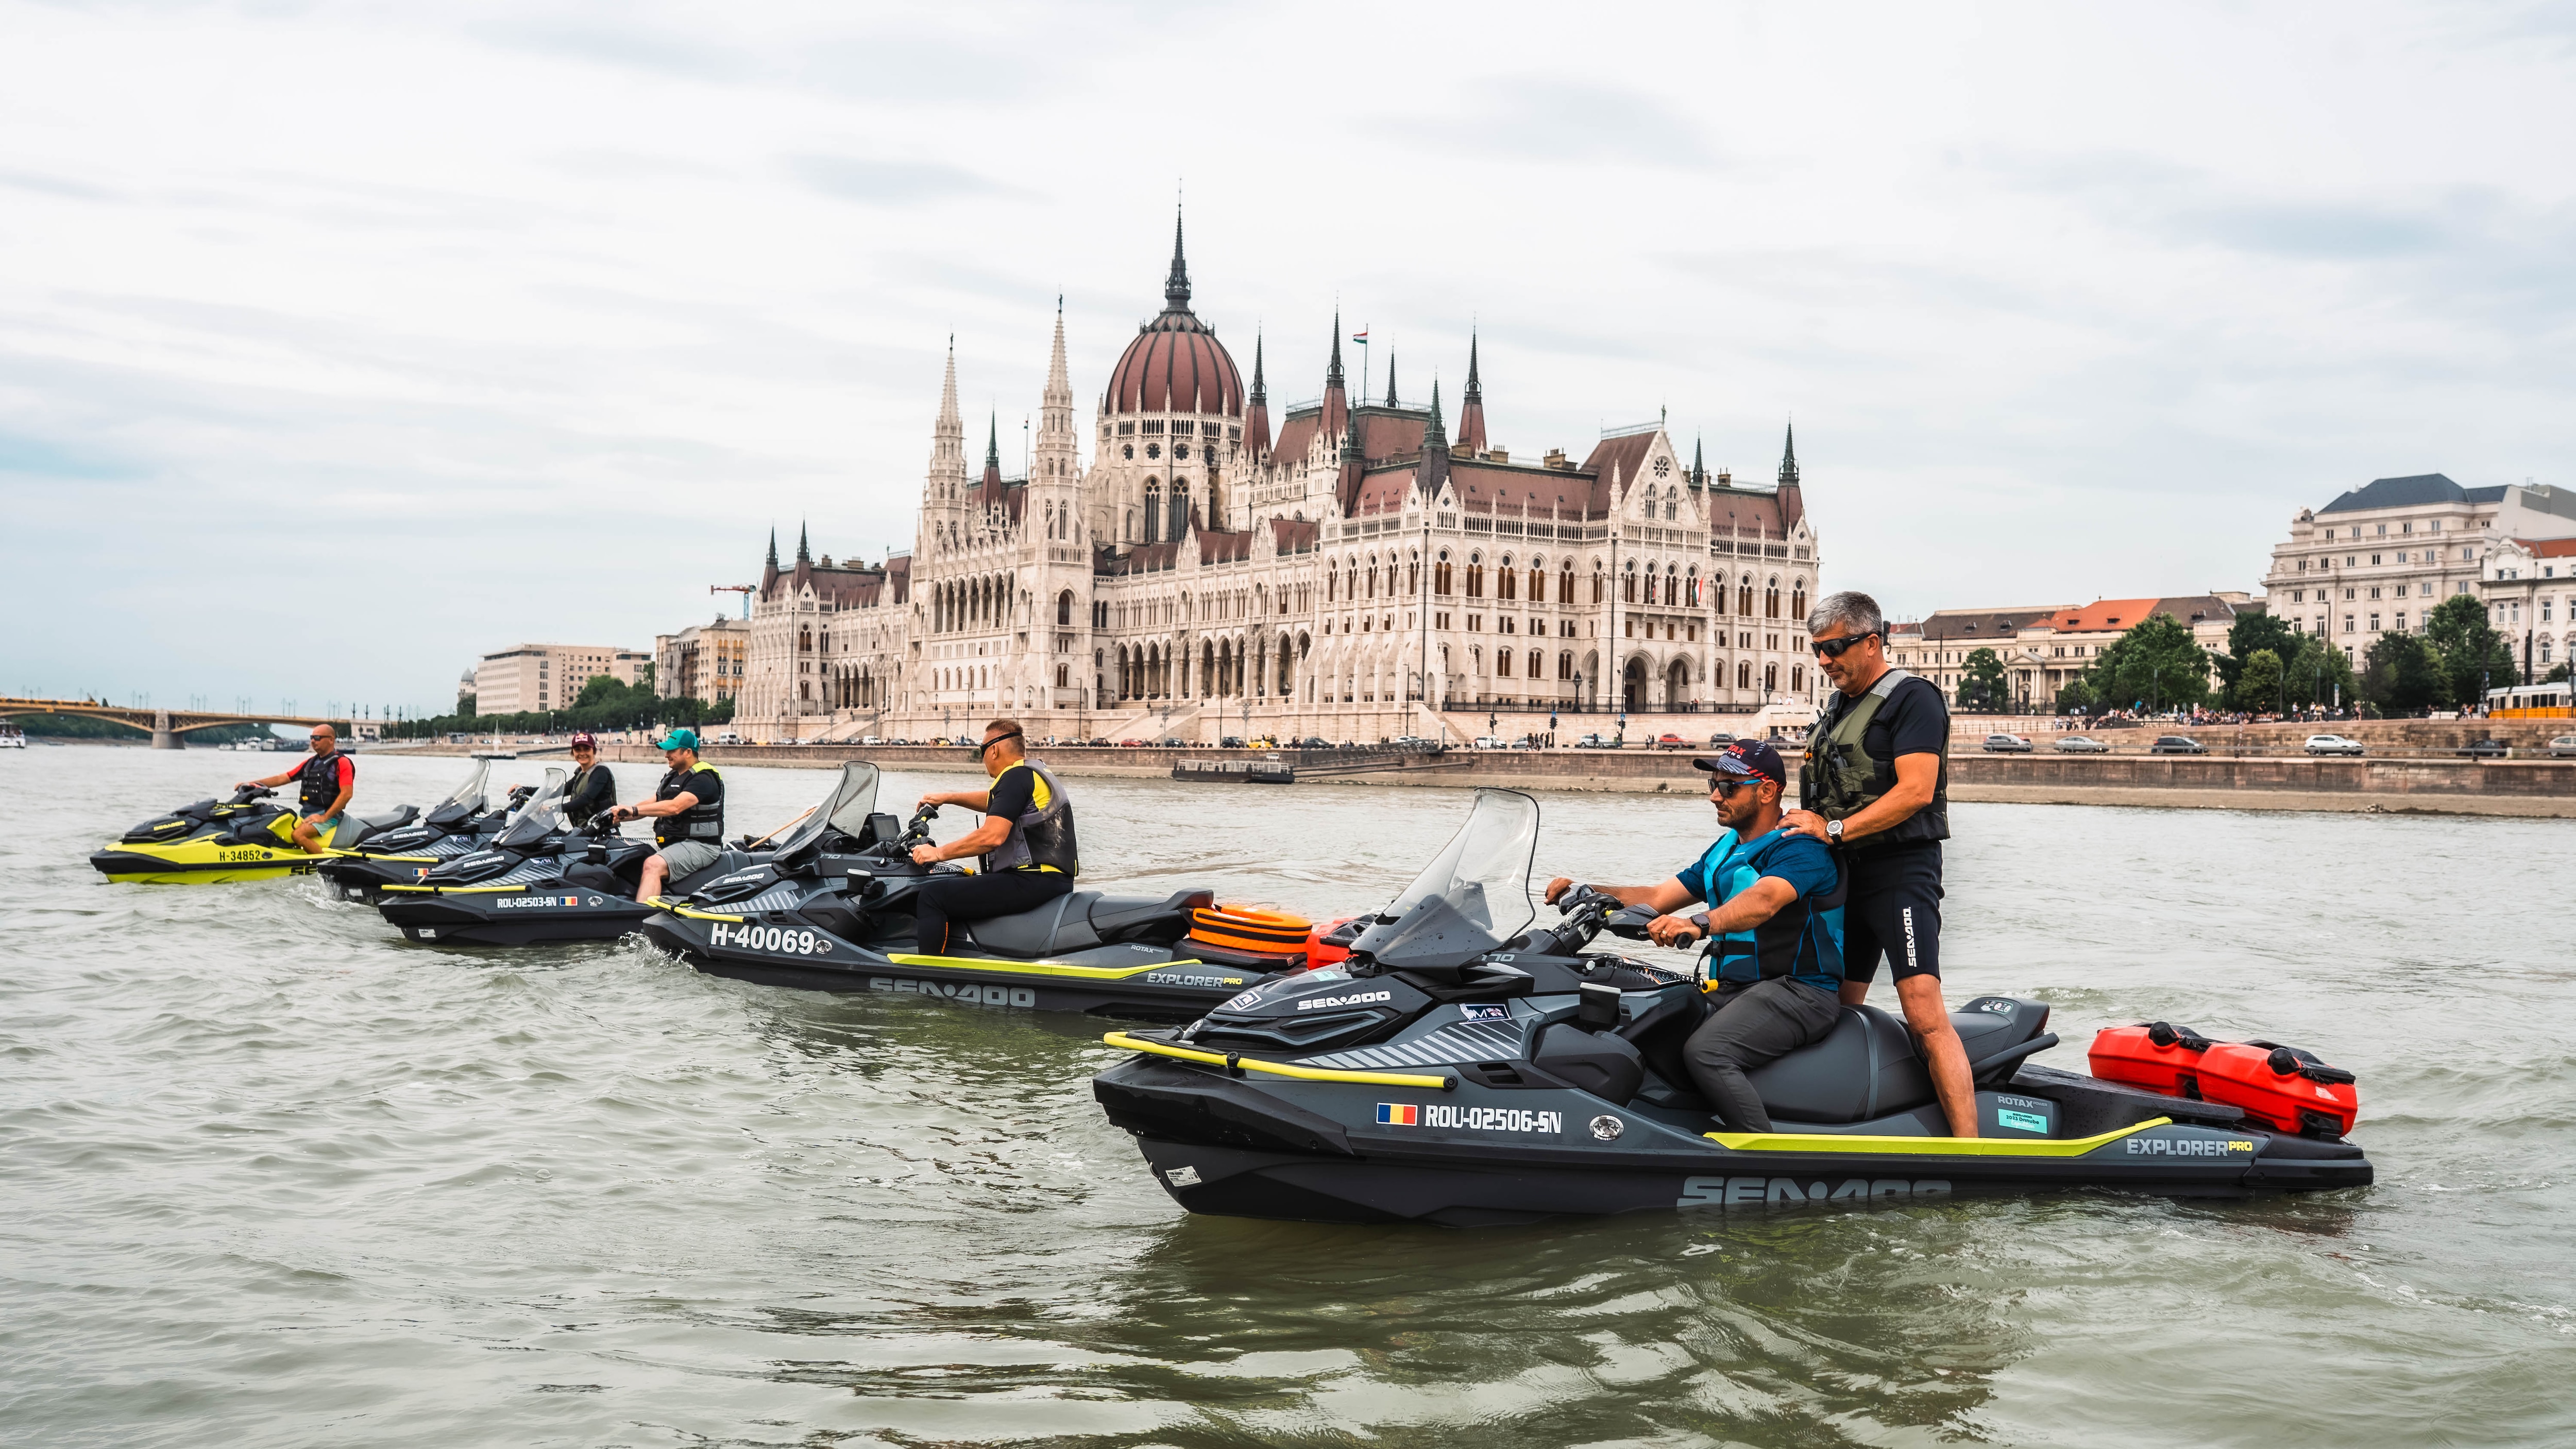 Sea-Doo Danube Budapest